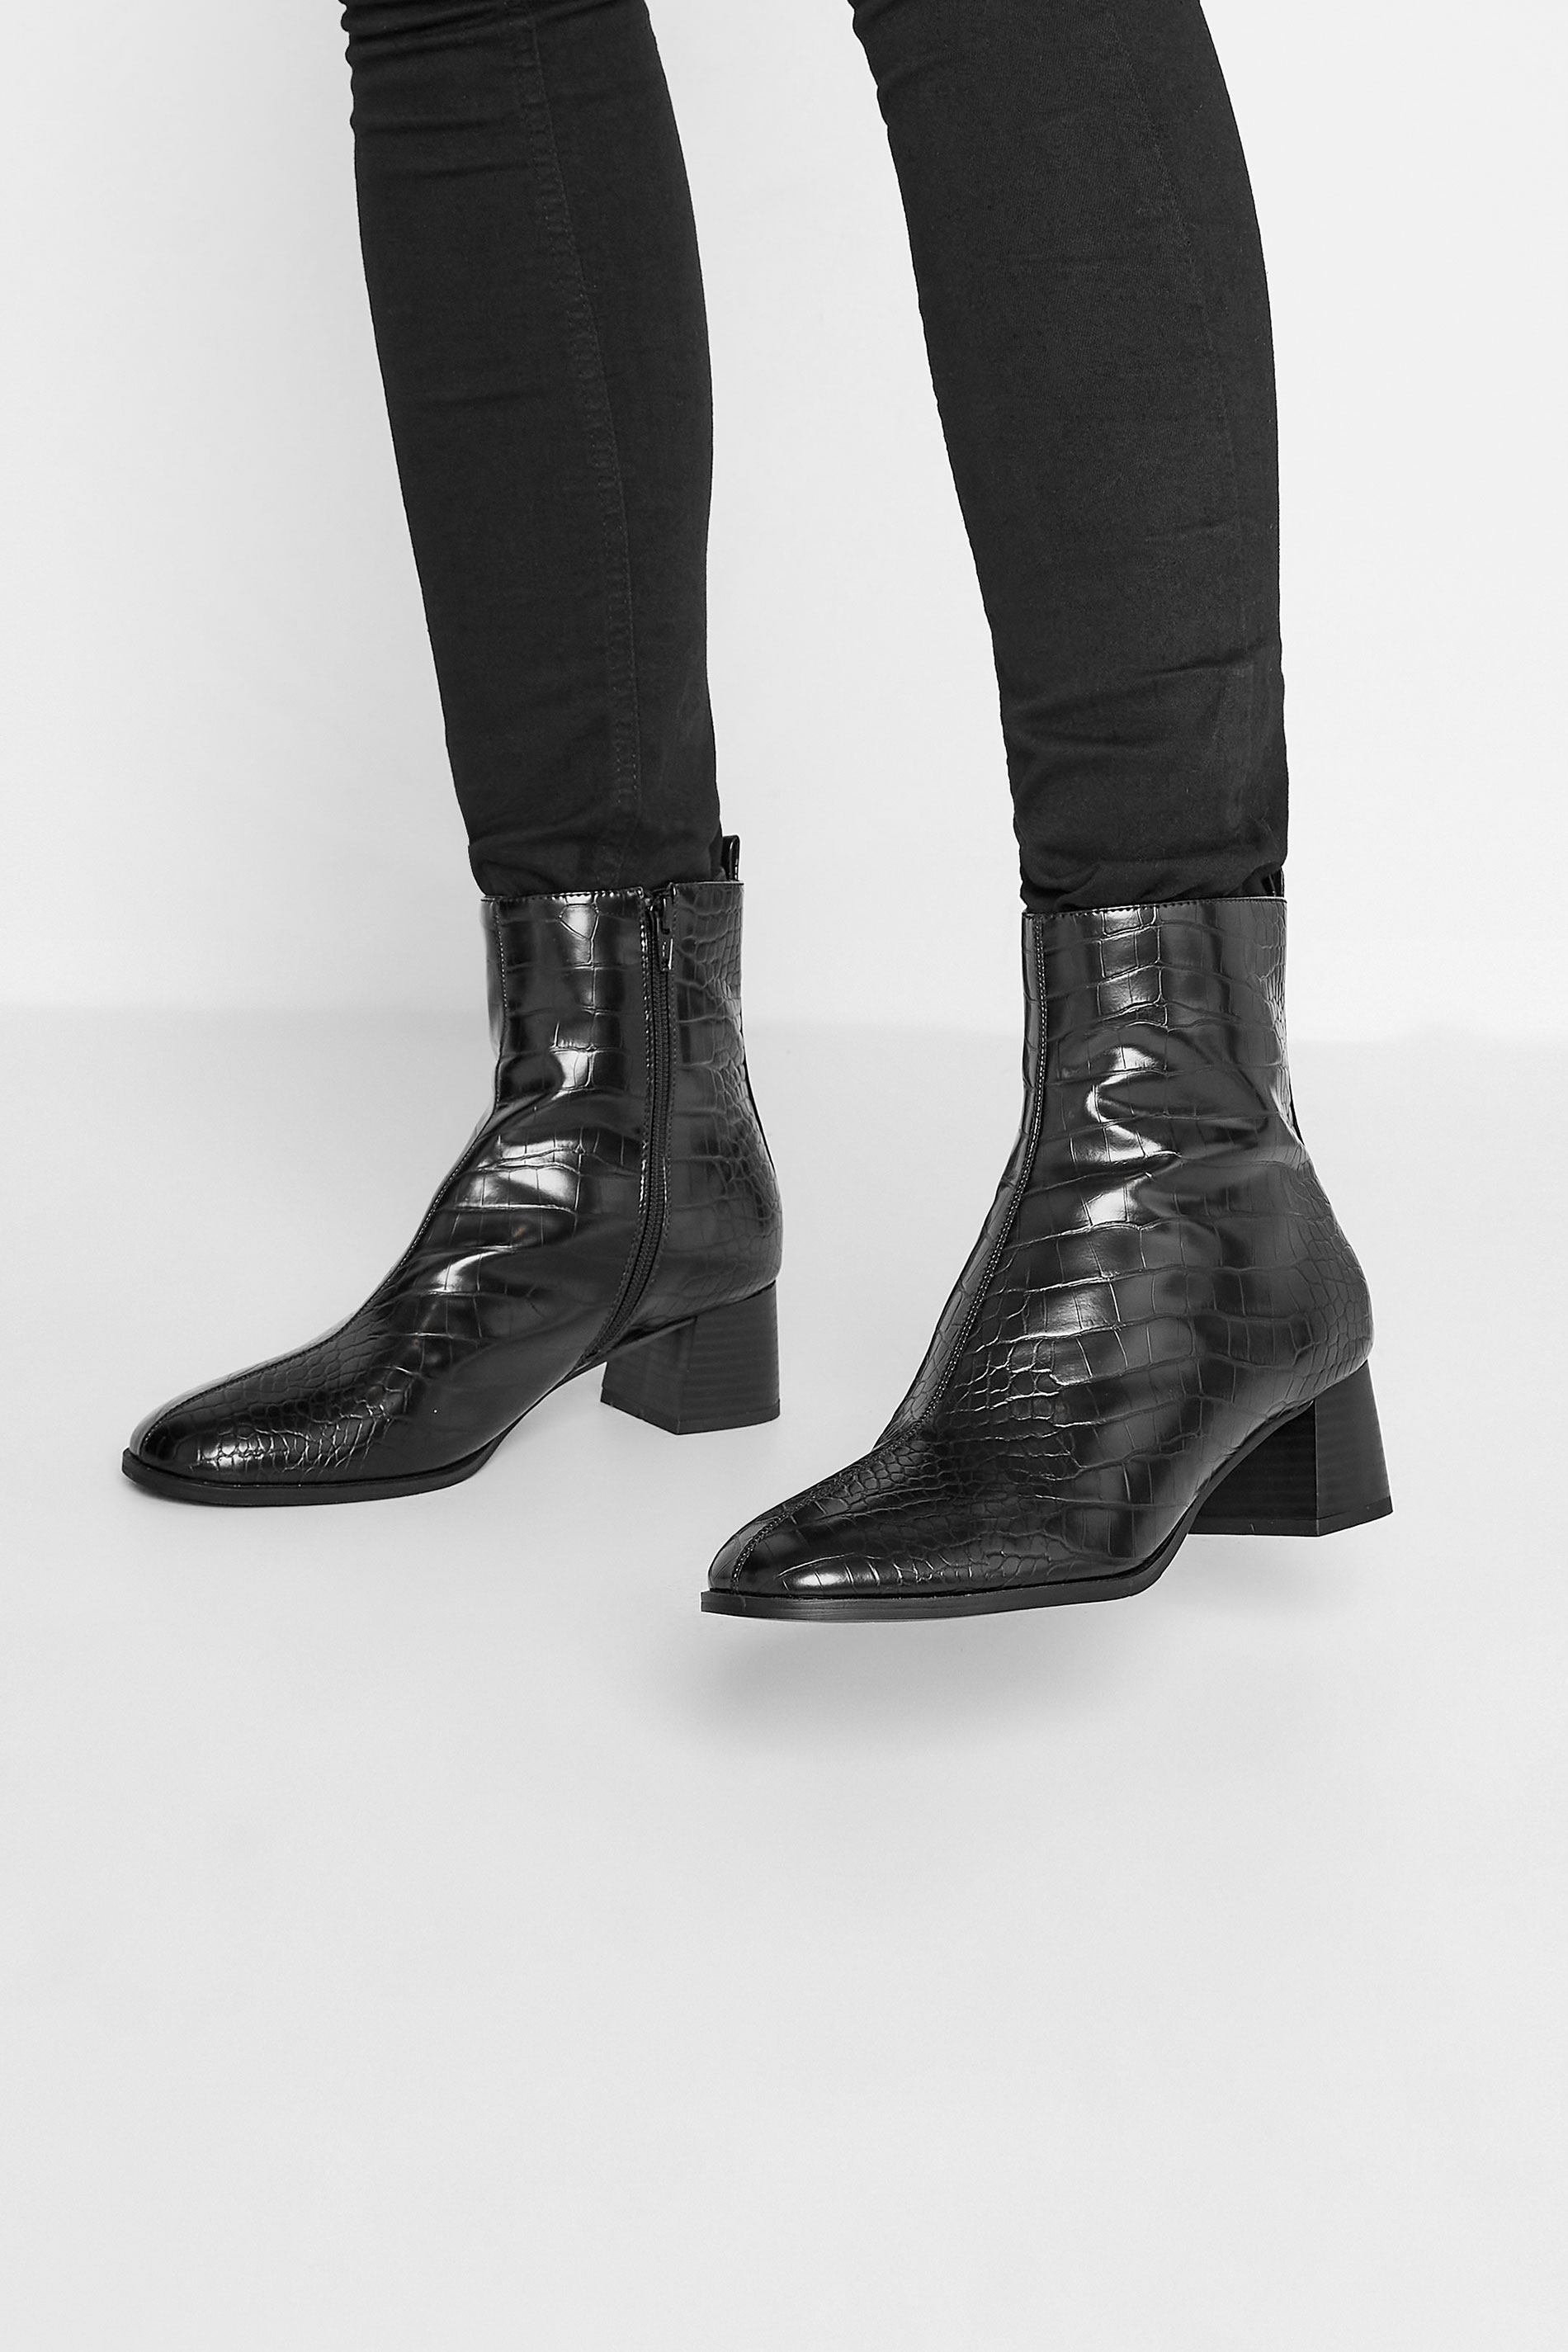 LTS Black Croc Block Heel Boots | Long Tall Sally 1